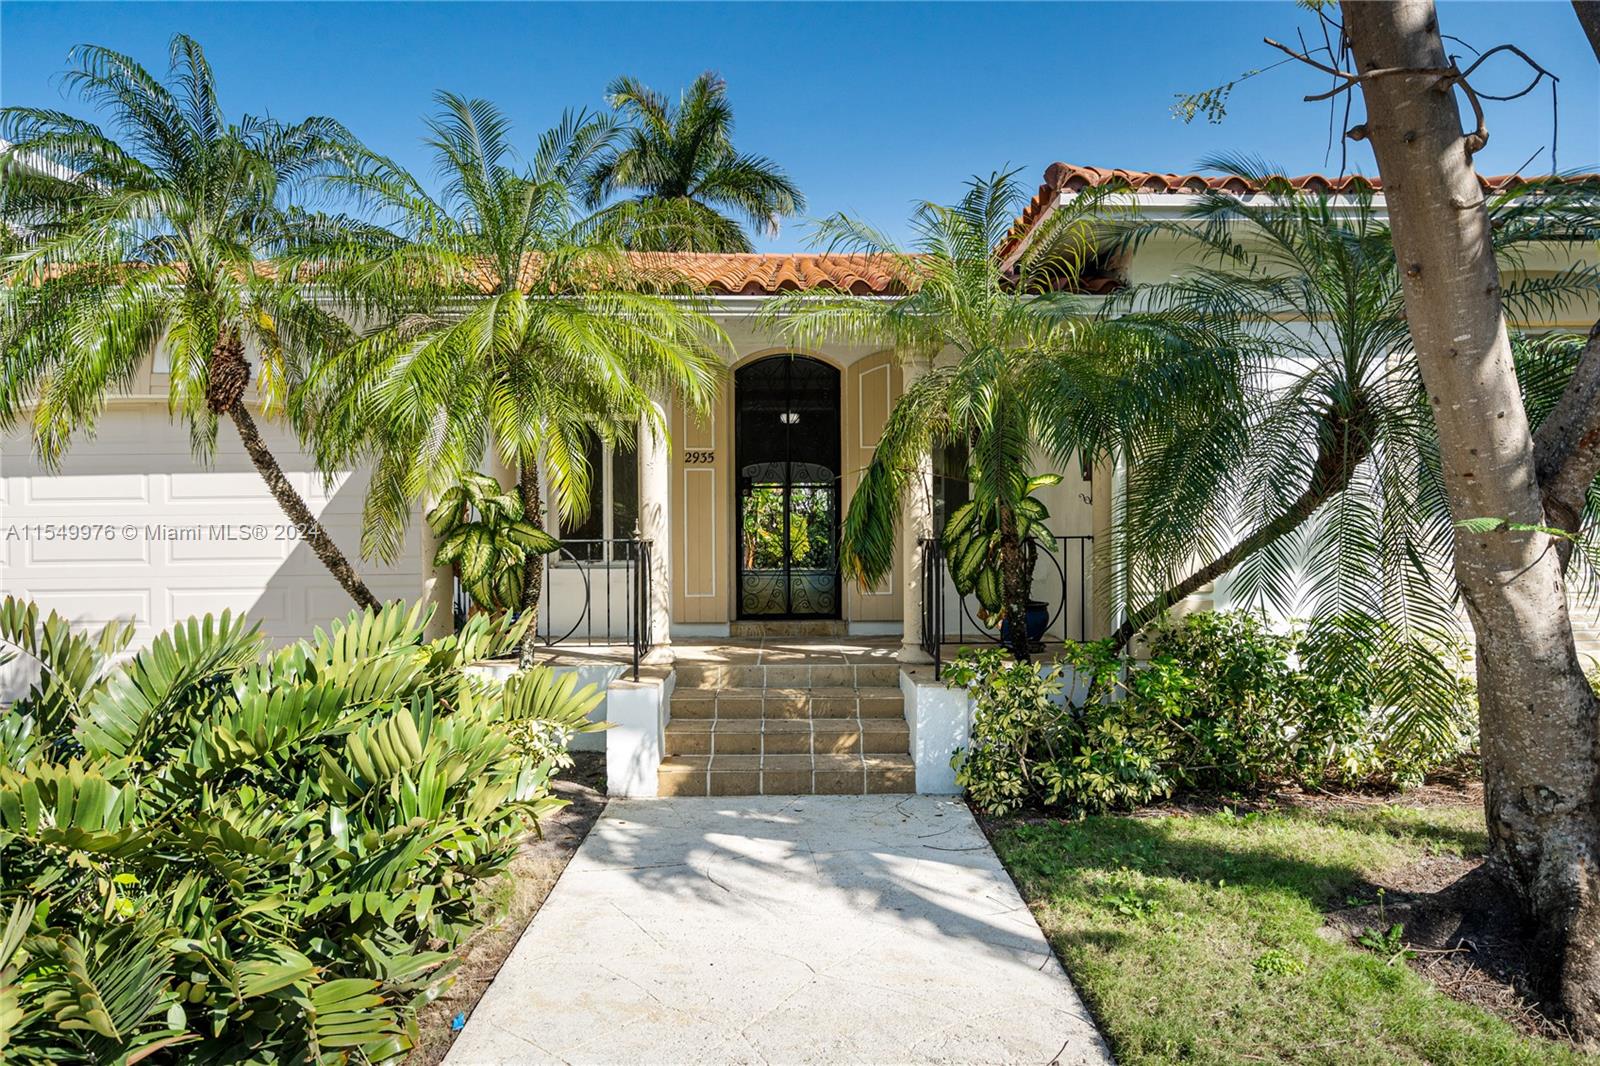 Rental Property at 2935 N Bay Rd Rd, Miami Beach, Miami-Dade County, Florida - Bedrooms: 4 
Bathrooms: 3  - $9,500 MO.